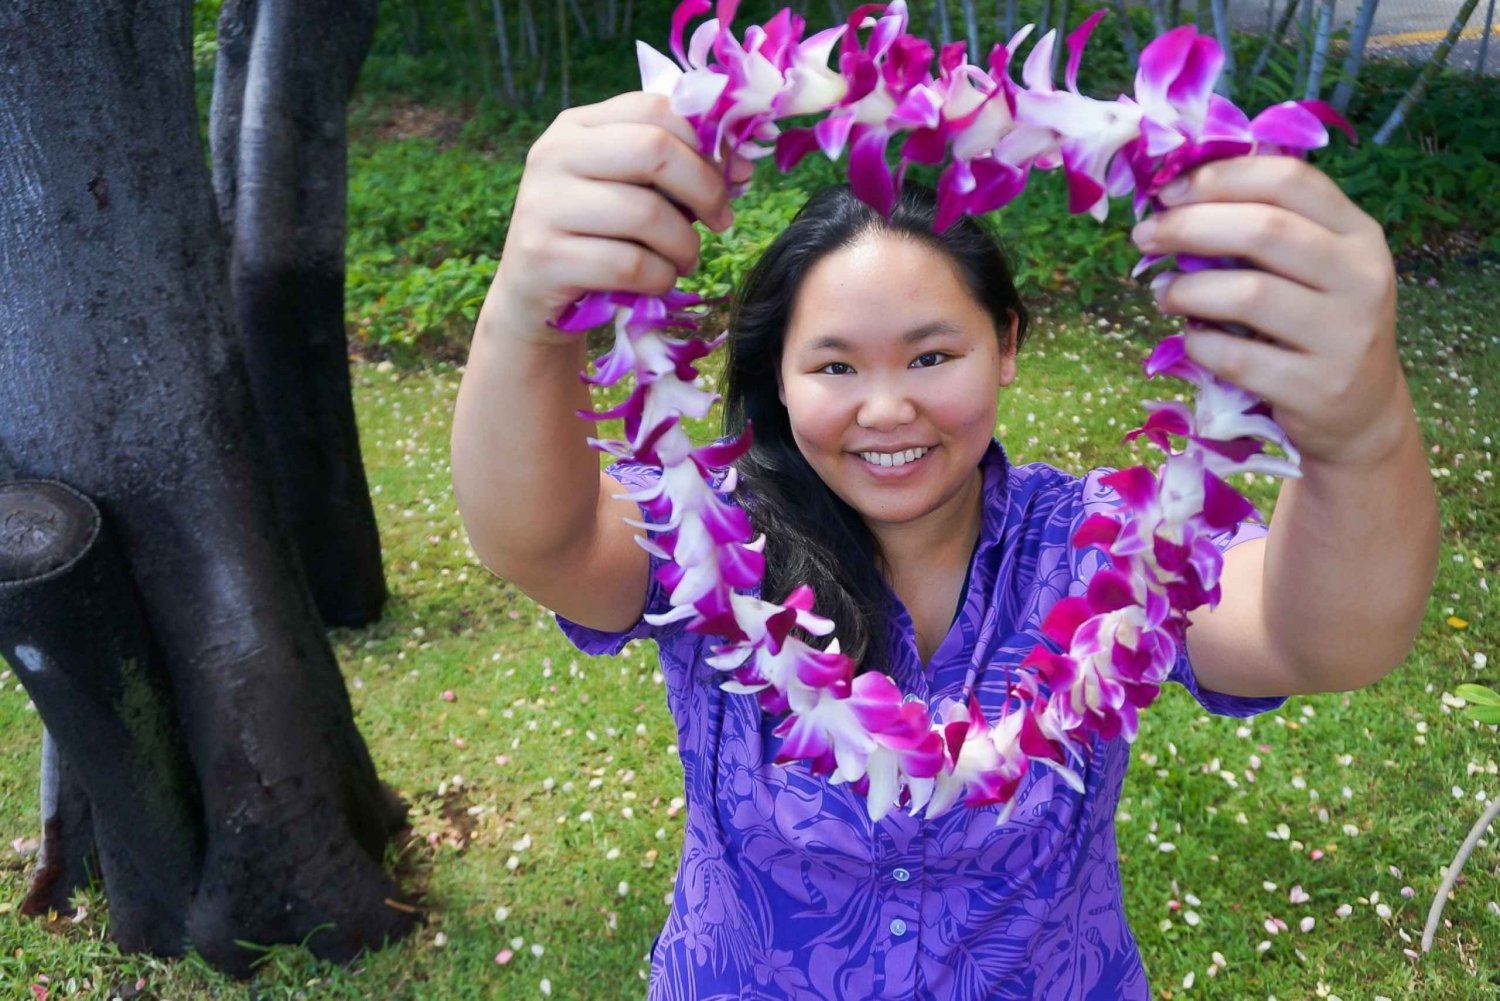 Oahu: Honolulu Airport (HNL) Traditional Lei Greeting